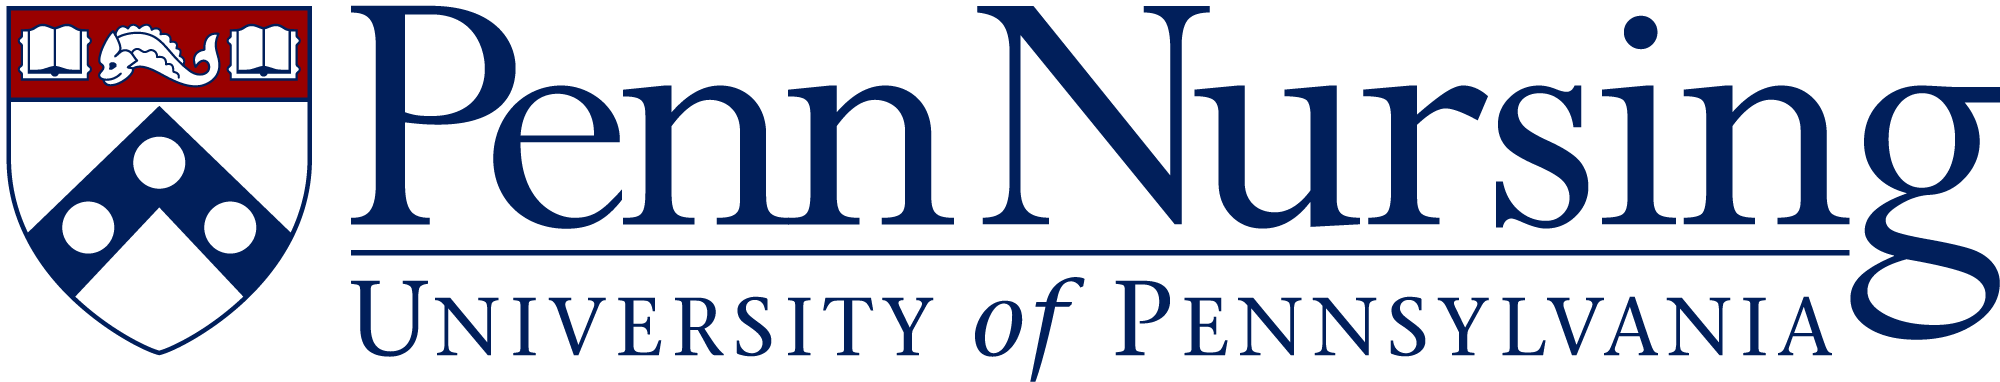 University of Pennsylvania School of Nursing logo